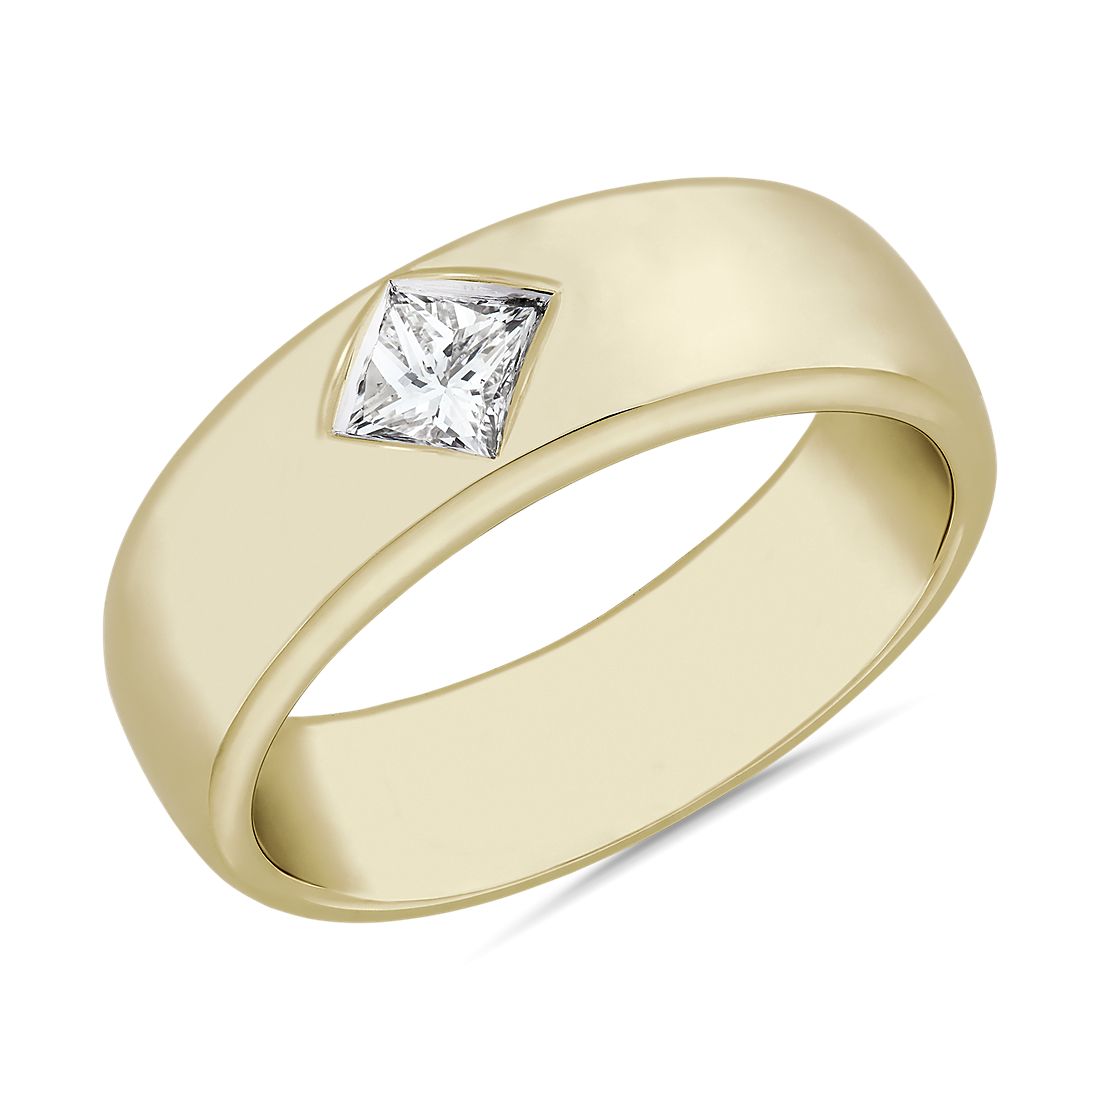 ZAC ZAC POSEN Compass Set Single Princess Shape Diamond Ring in 14k Yellow Gold (5.5 mm, 1/4 ct. tw.)